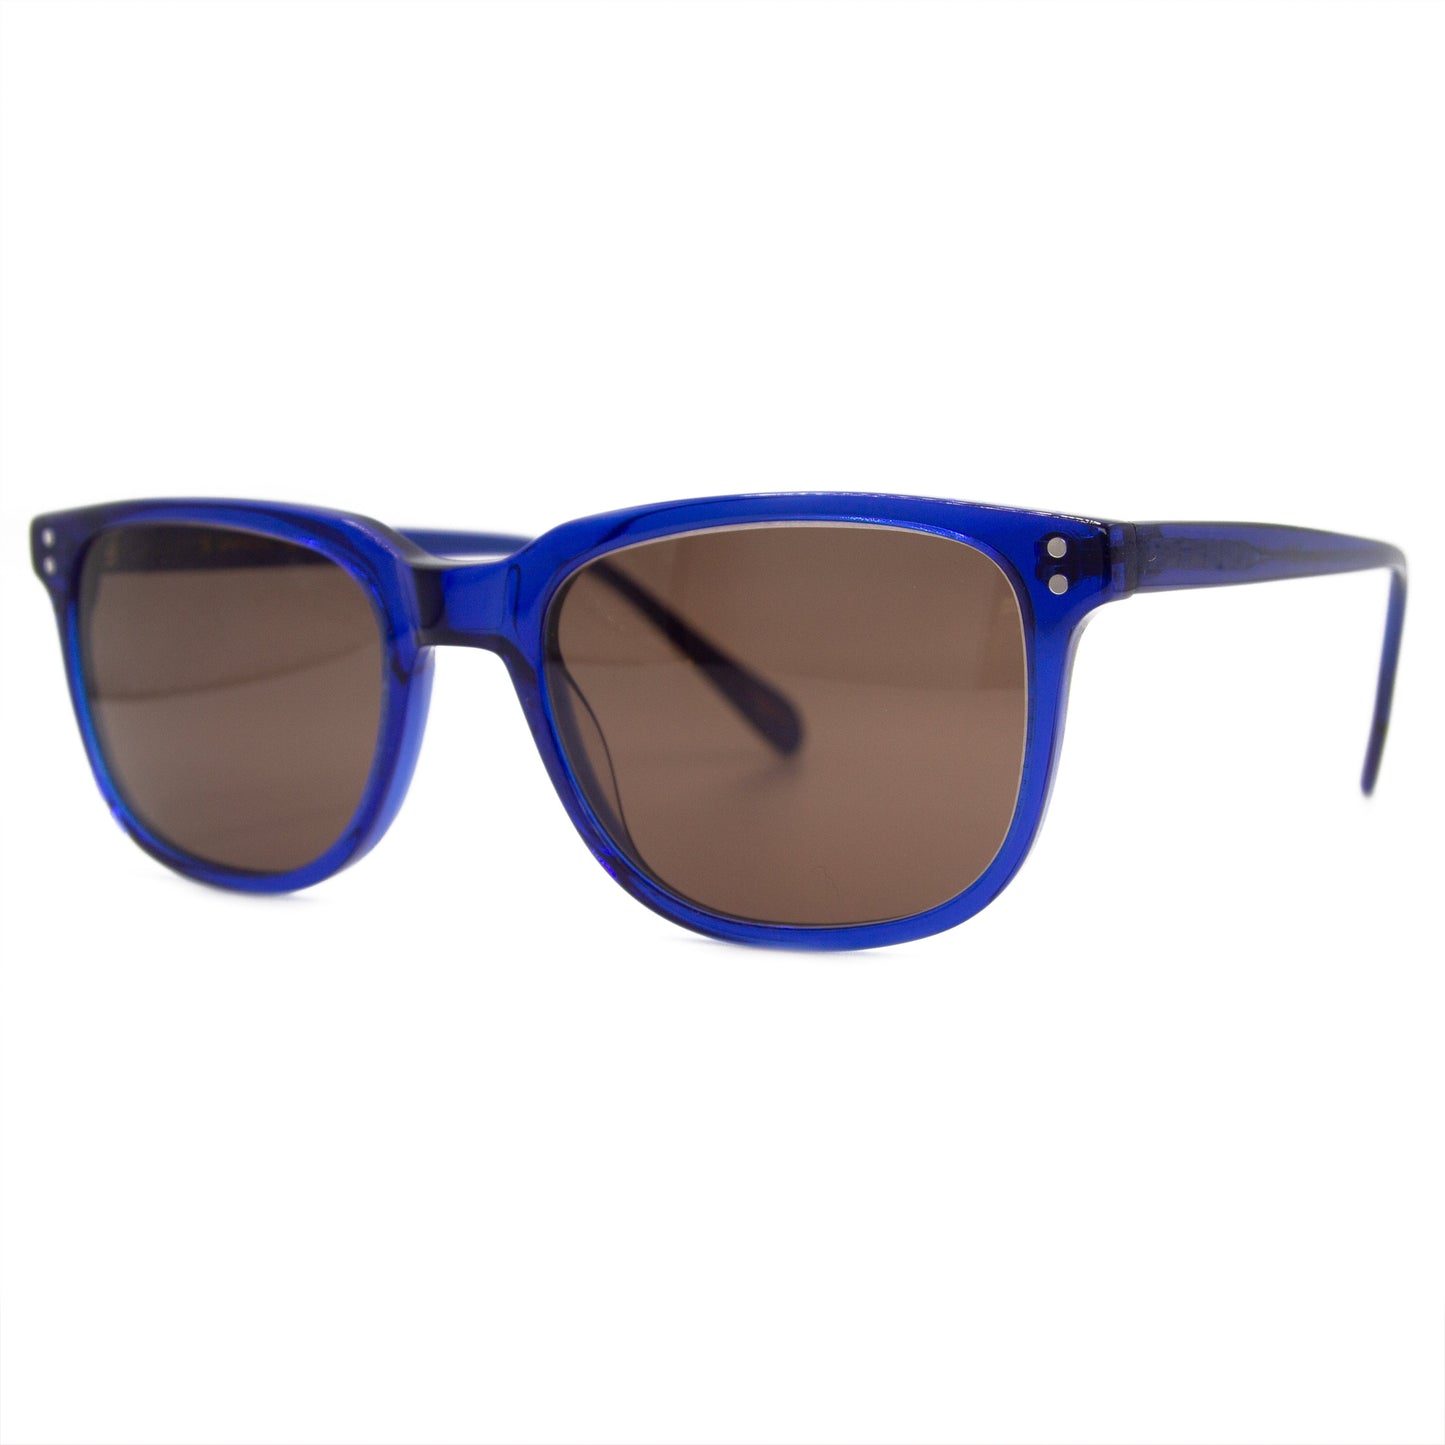 Square Blue Sunglasses